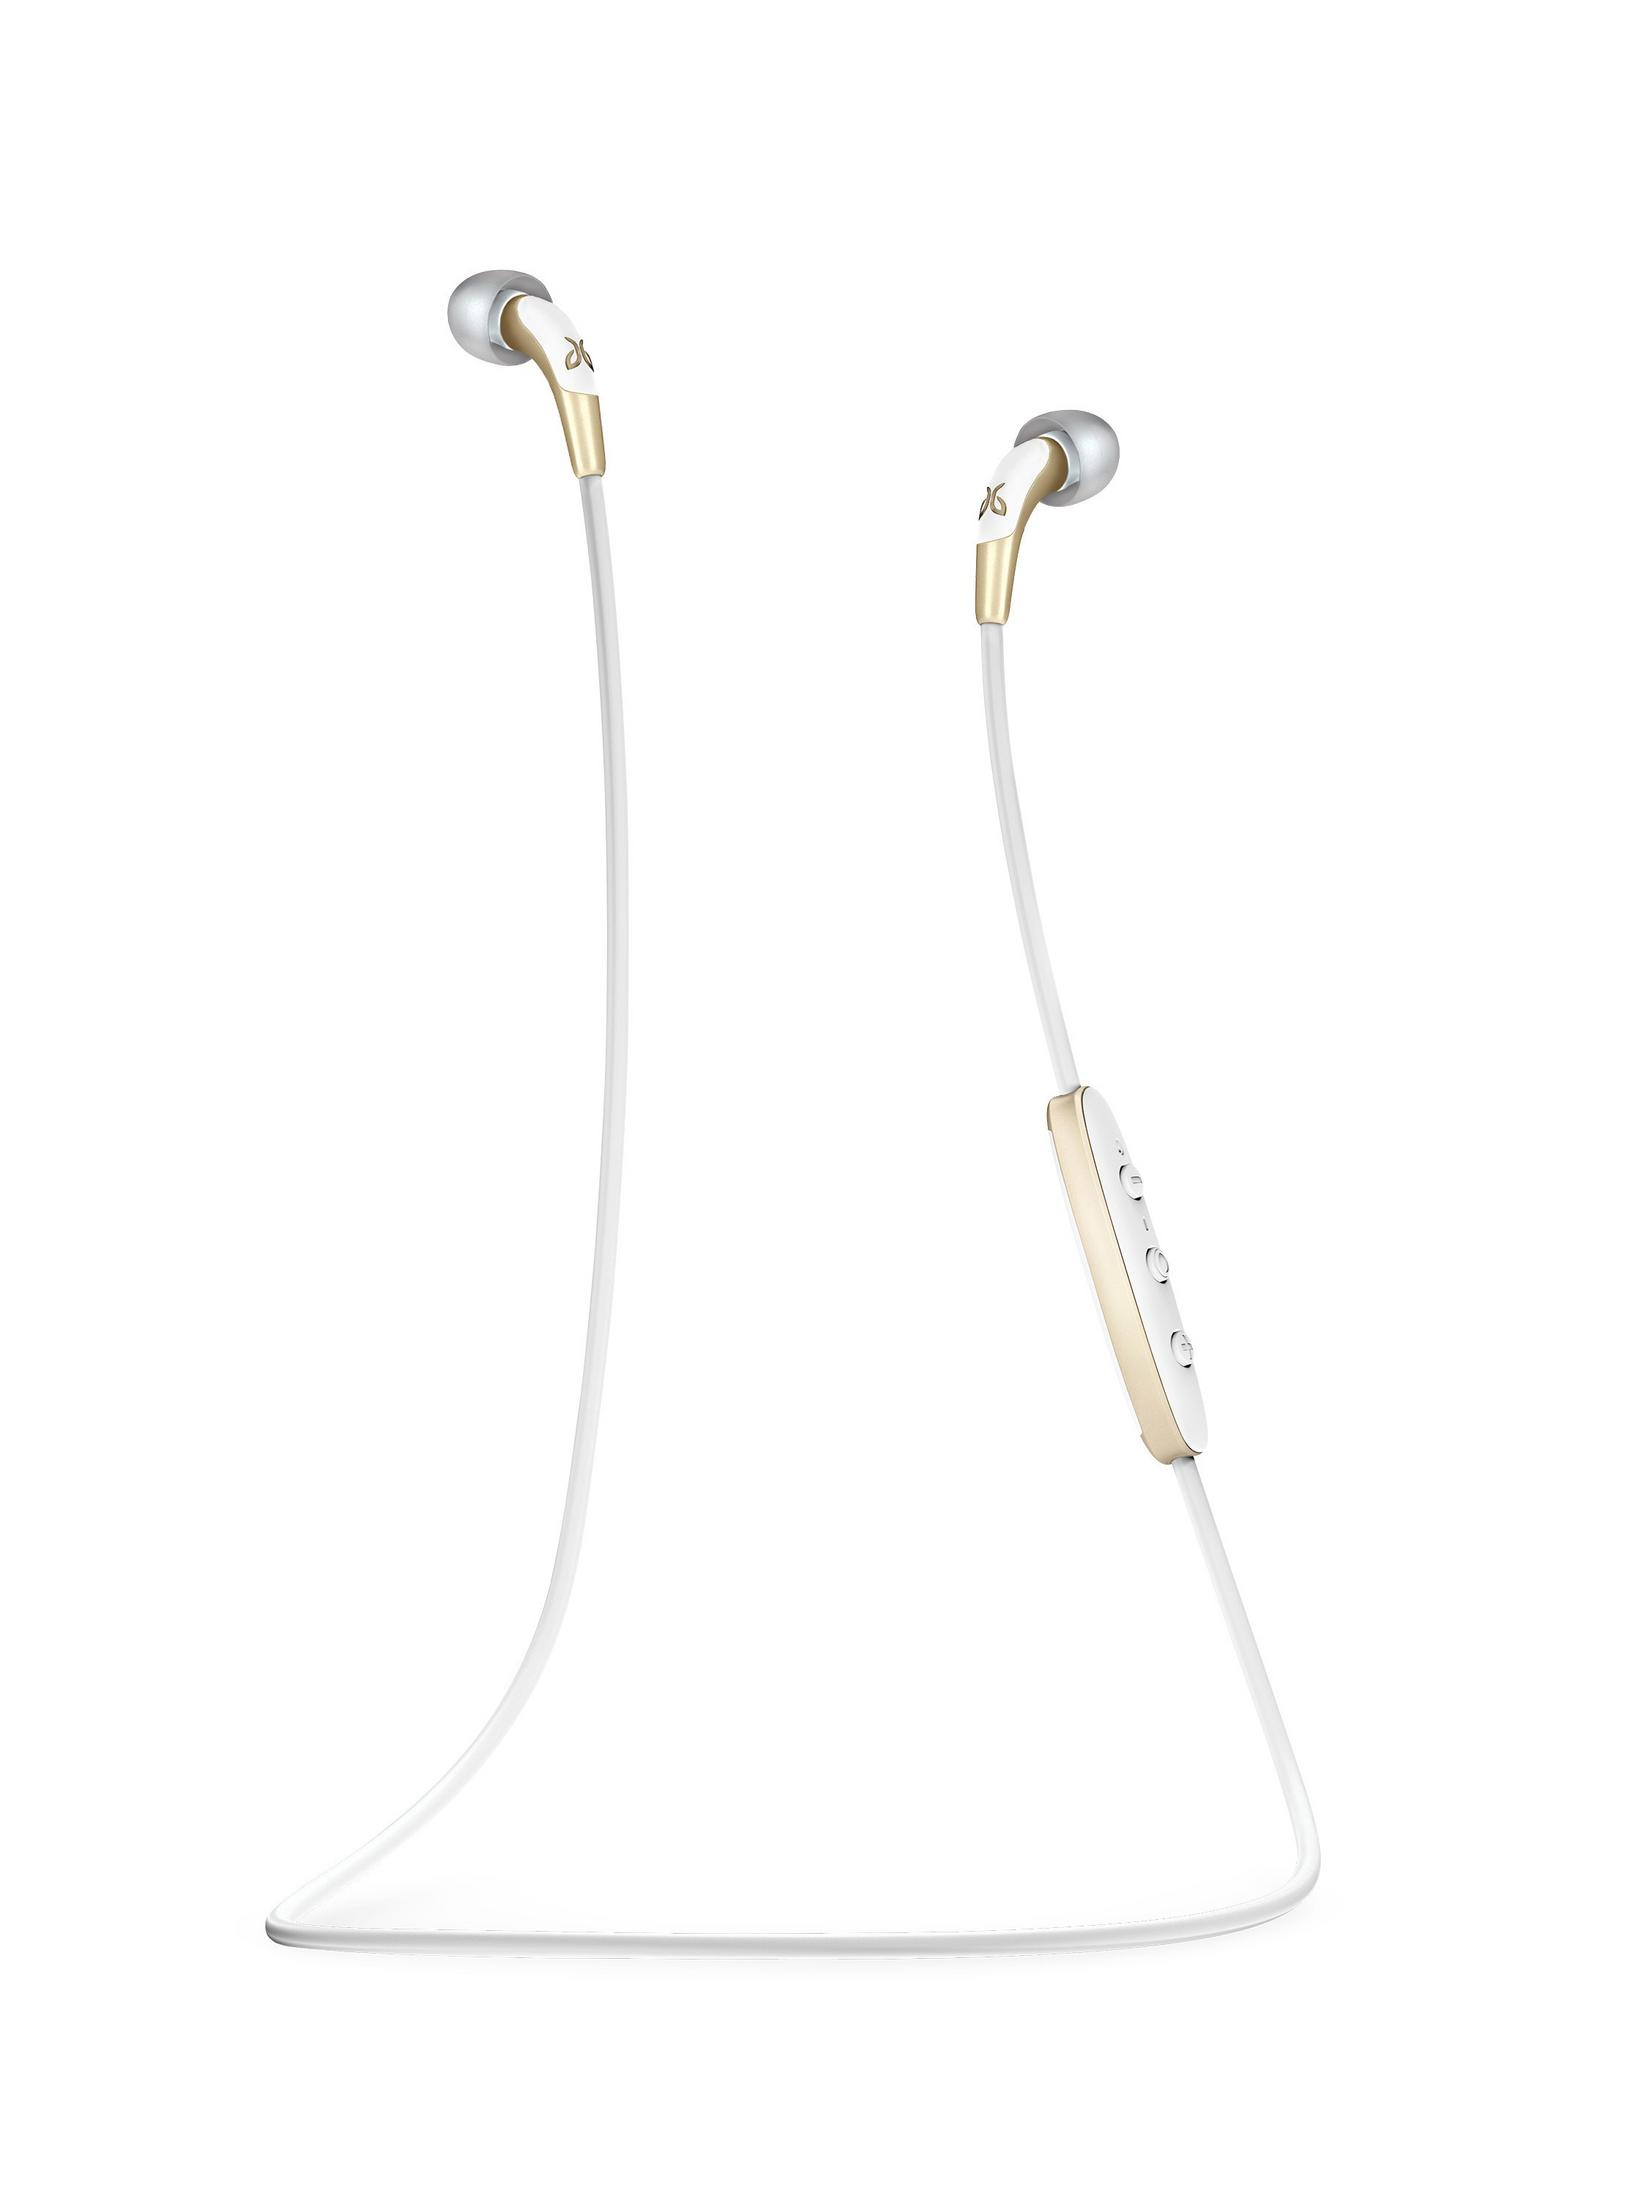 Gold In-ear JAYBIRD Kopfhörer GOLD, F5-S-G-EMEA Bluetooth FREEDOM